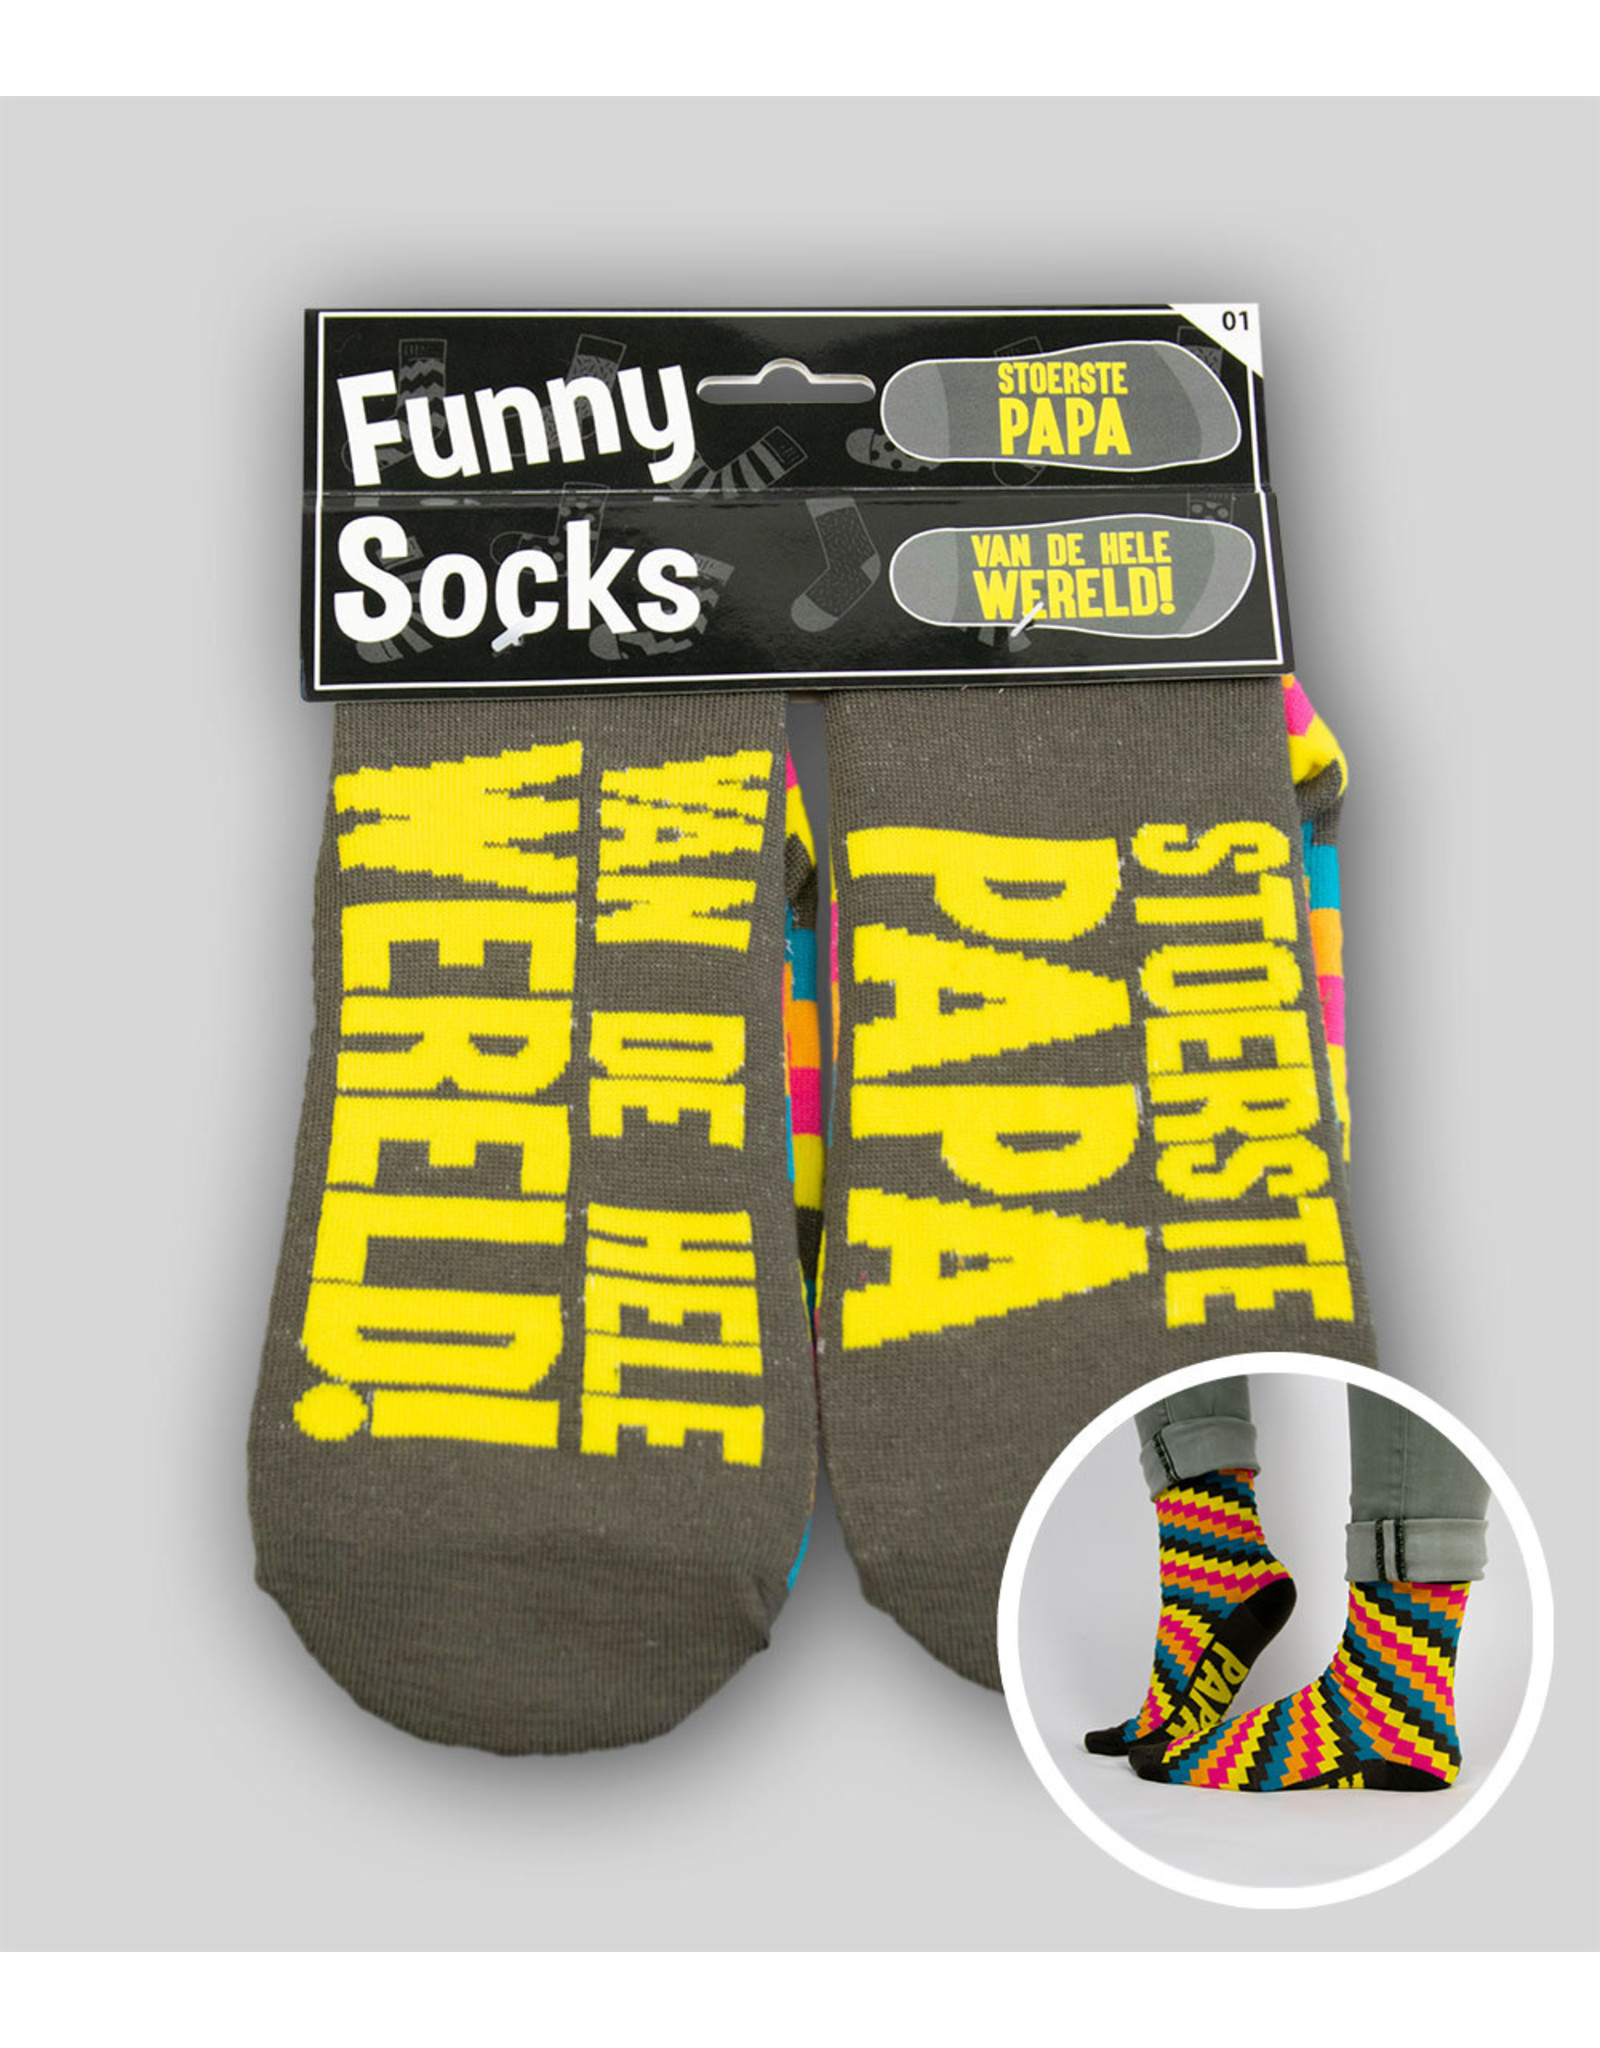 Funny Socks - Stoerste papa